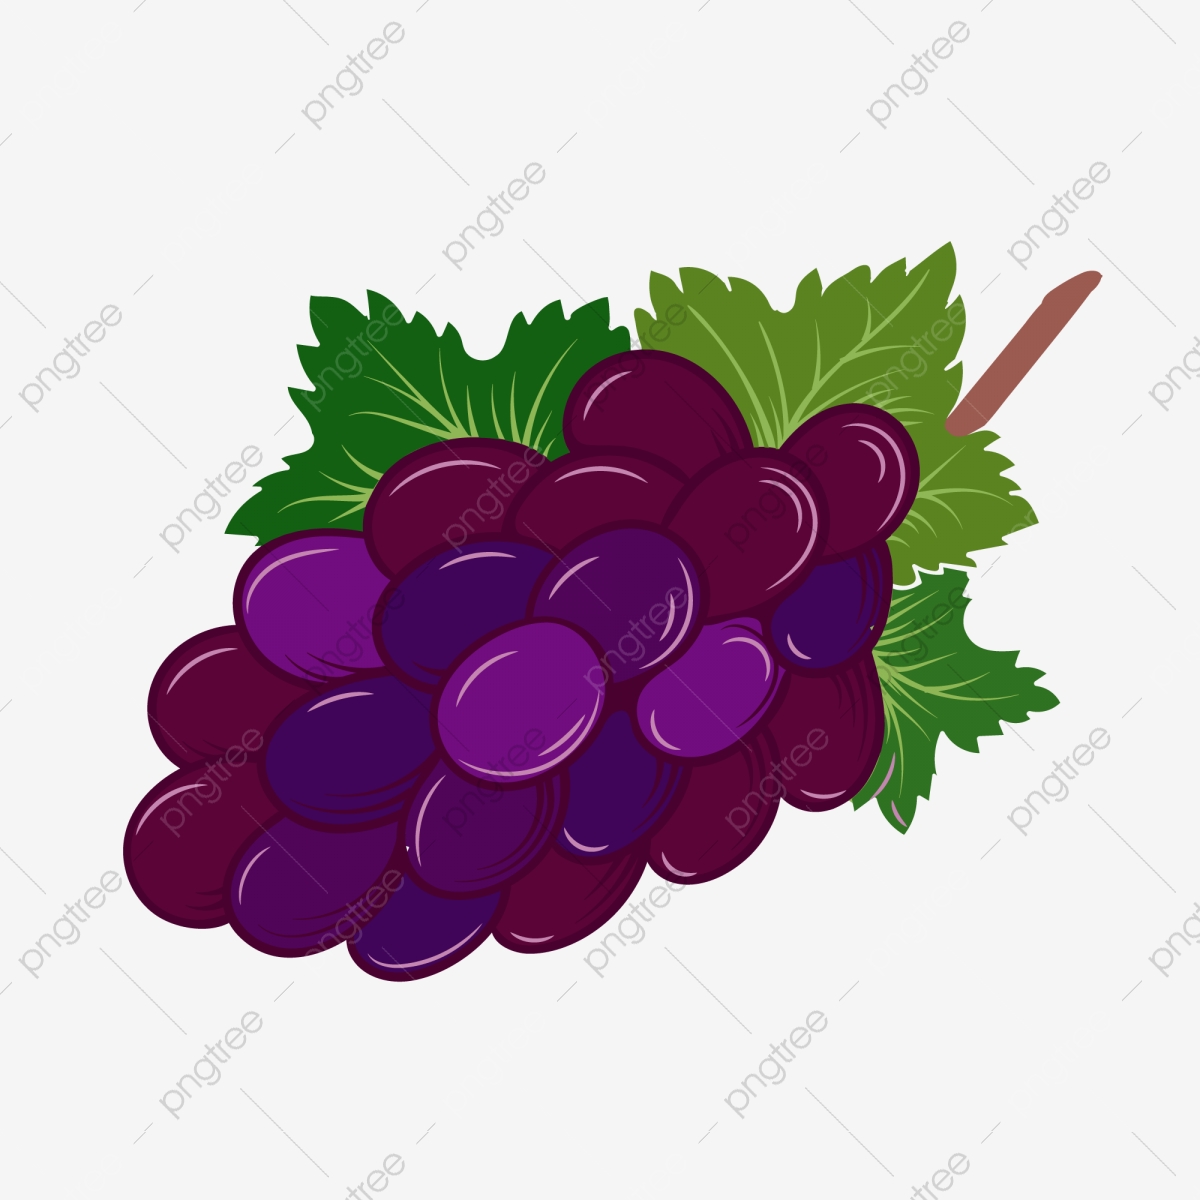 Grape fruit png transparent. Grapes clipart purple thing